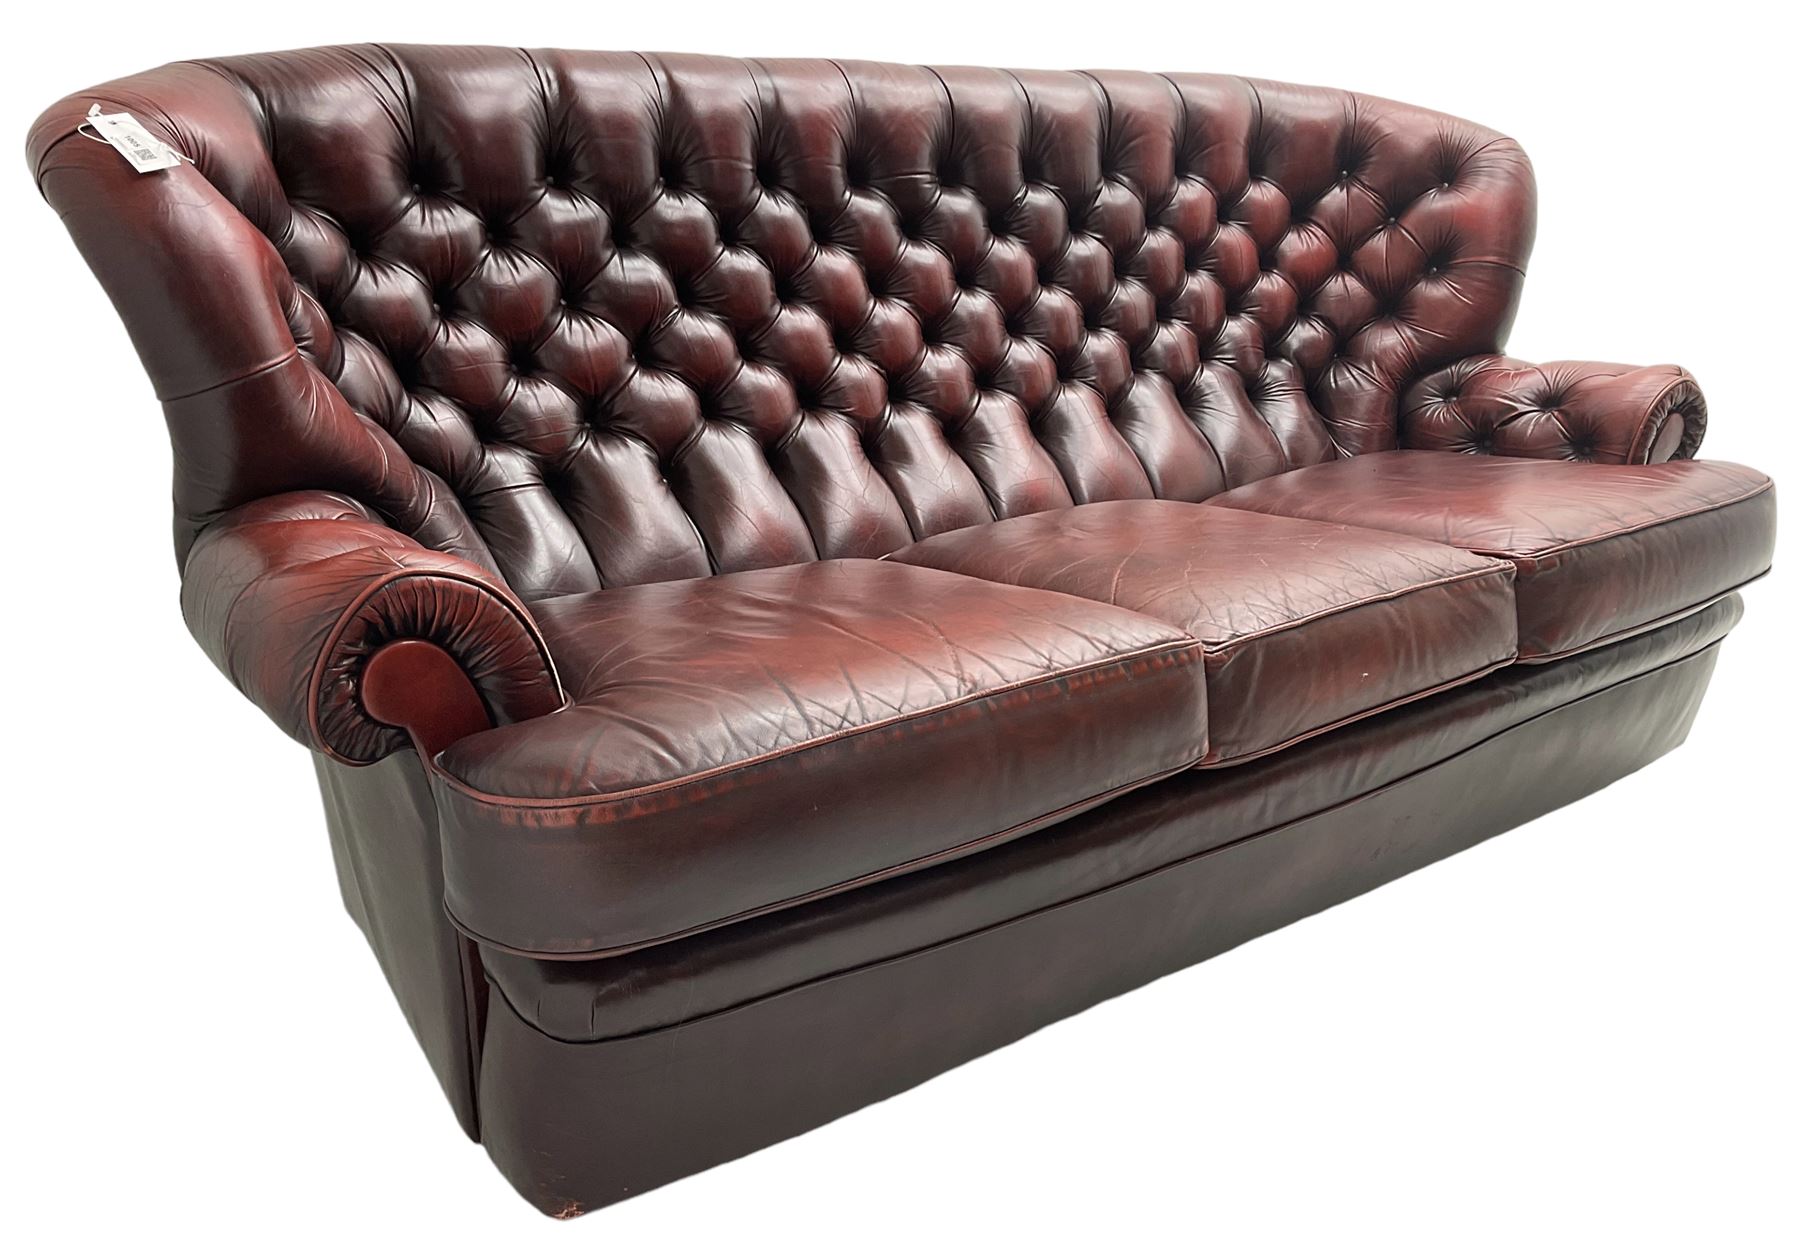 Wade - Georgian design three-seat sofa - Image 5 of 8